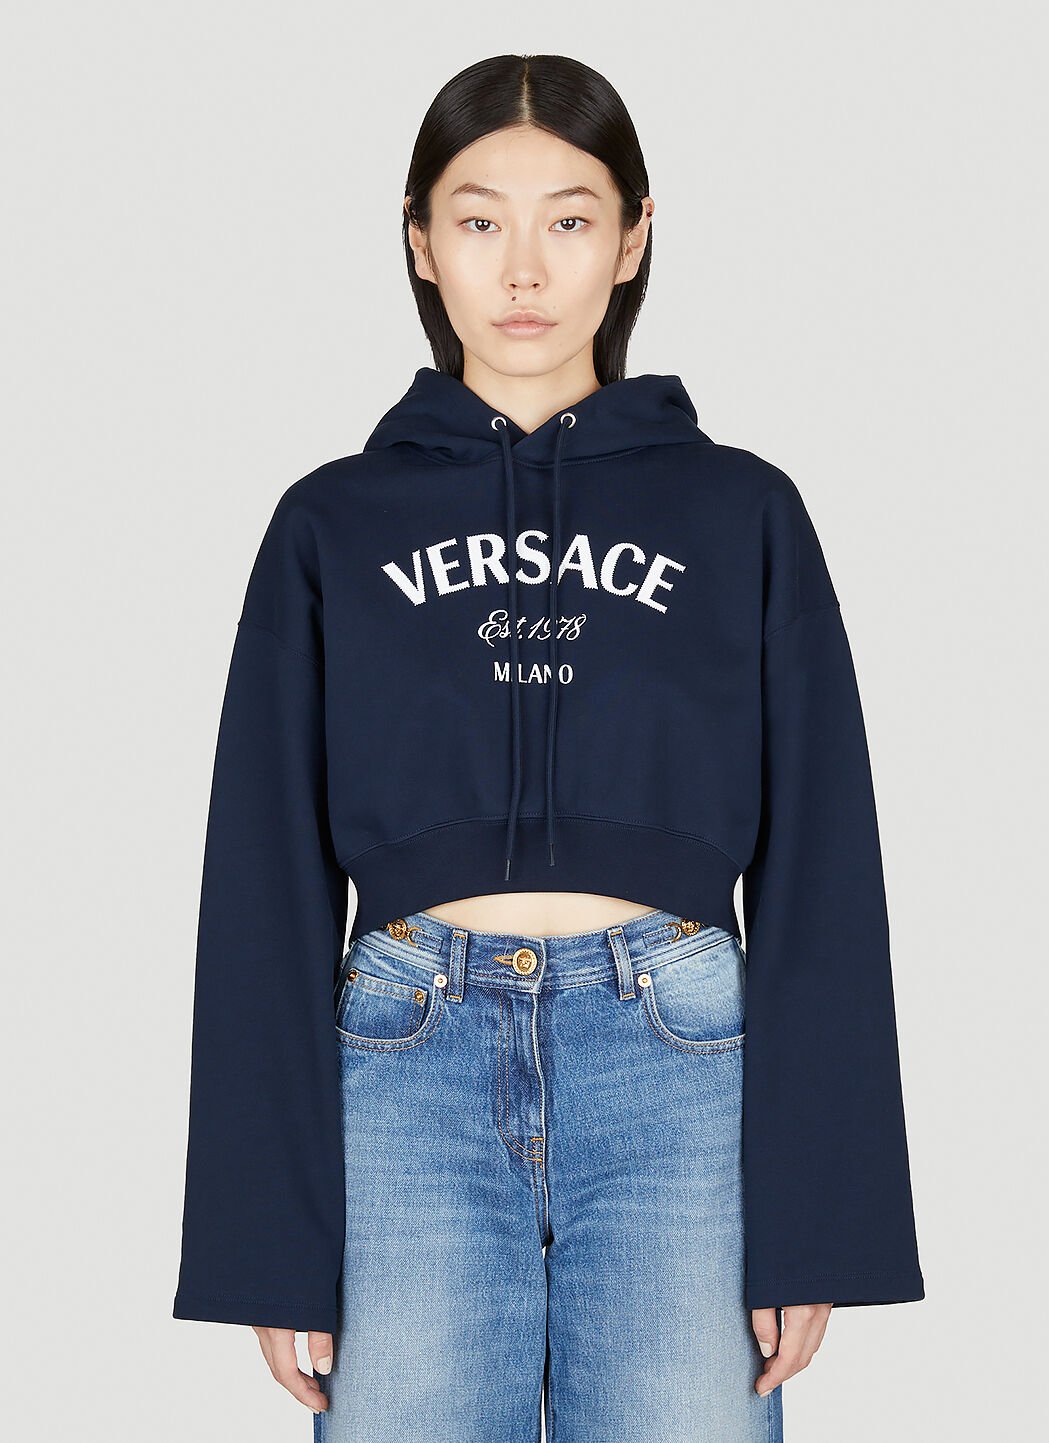 Versace ミラノスタンプ クロップフード付きスウェットシャツ ブルー ver0255008